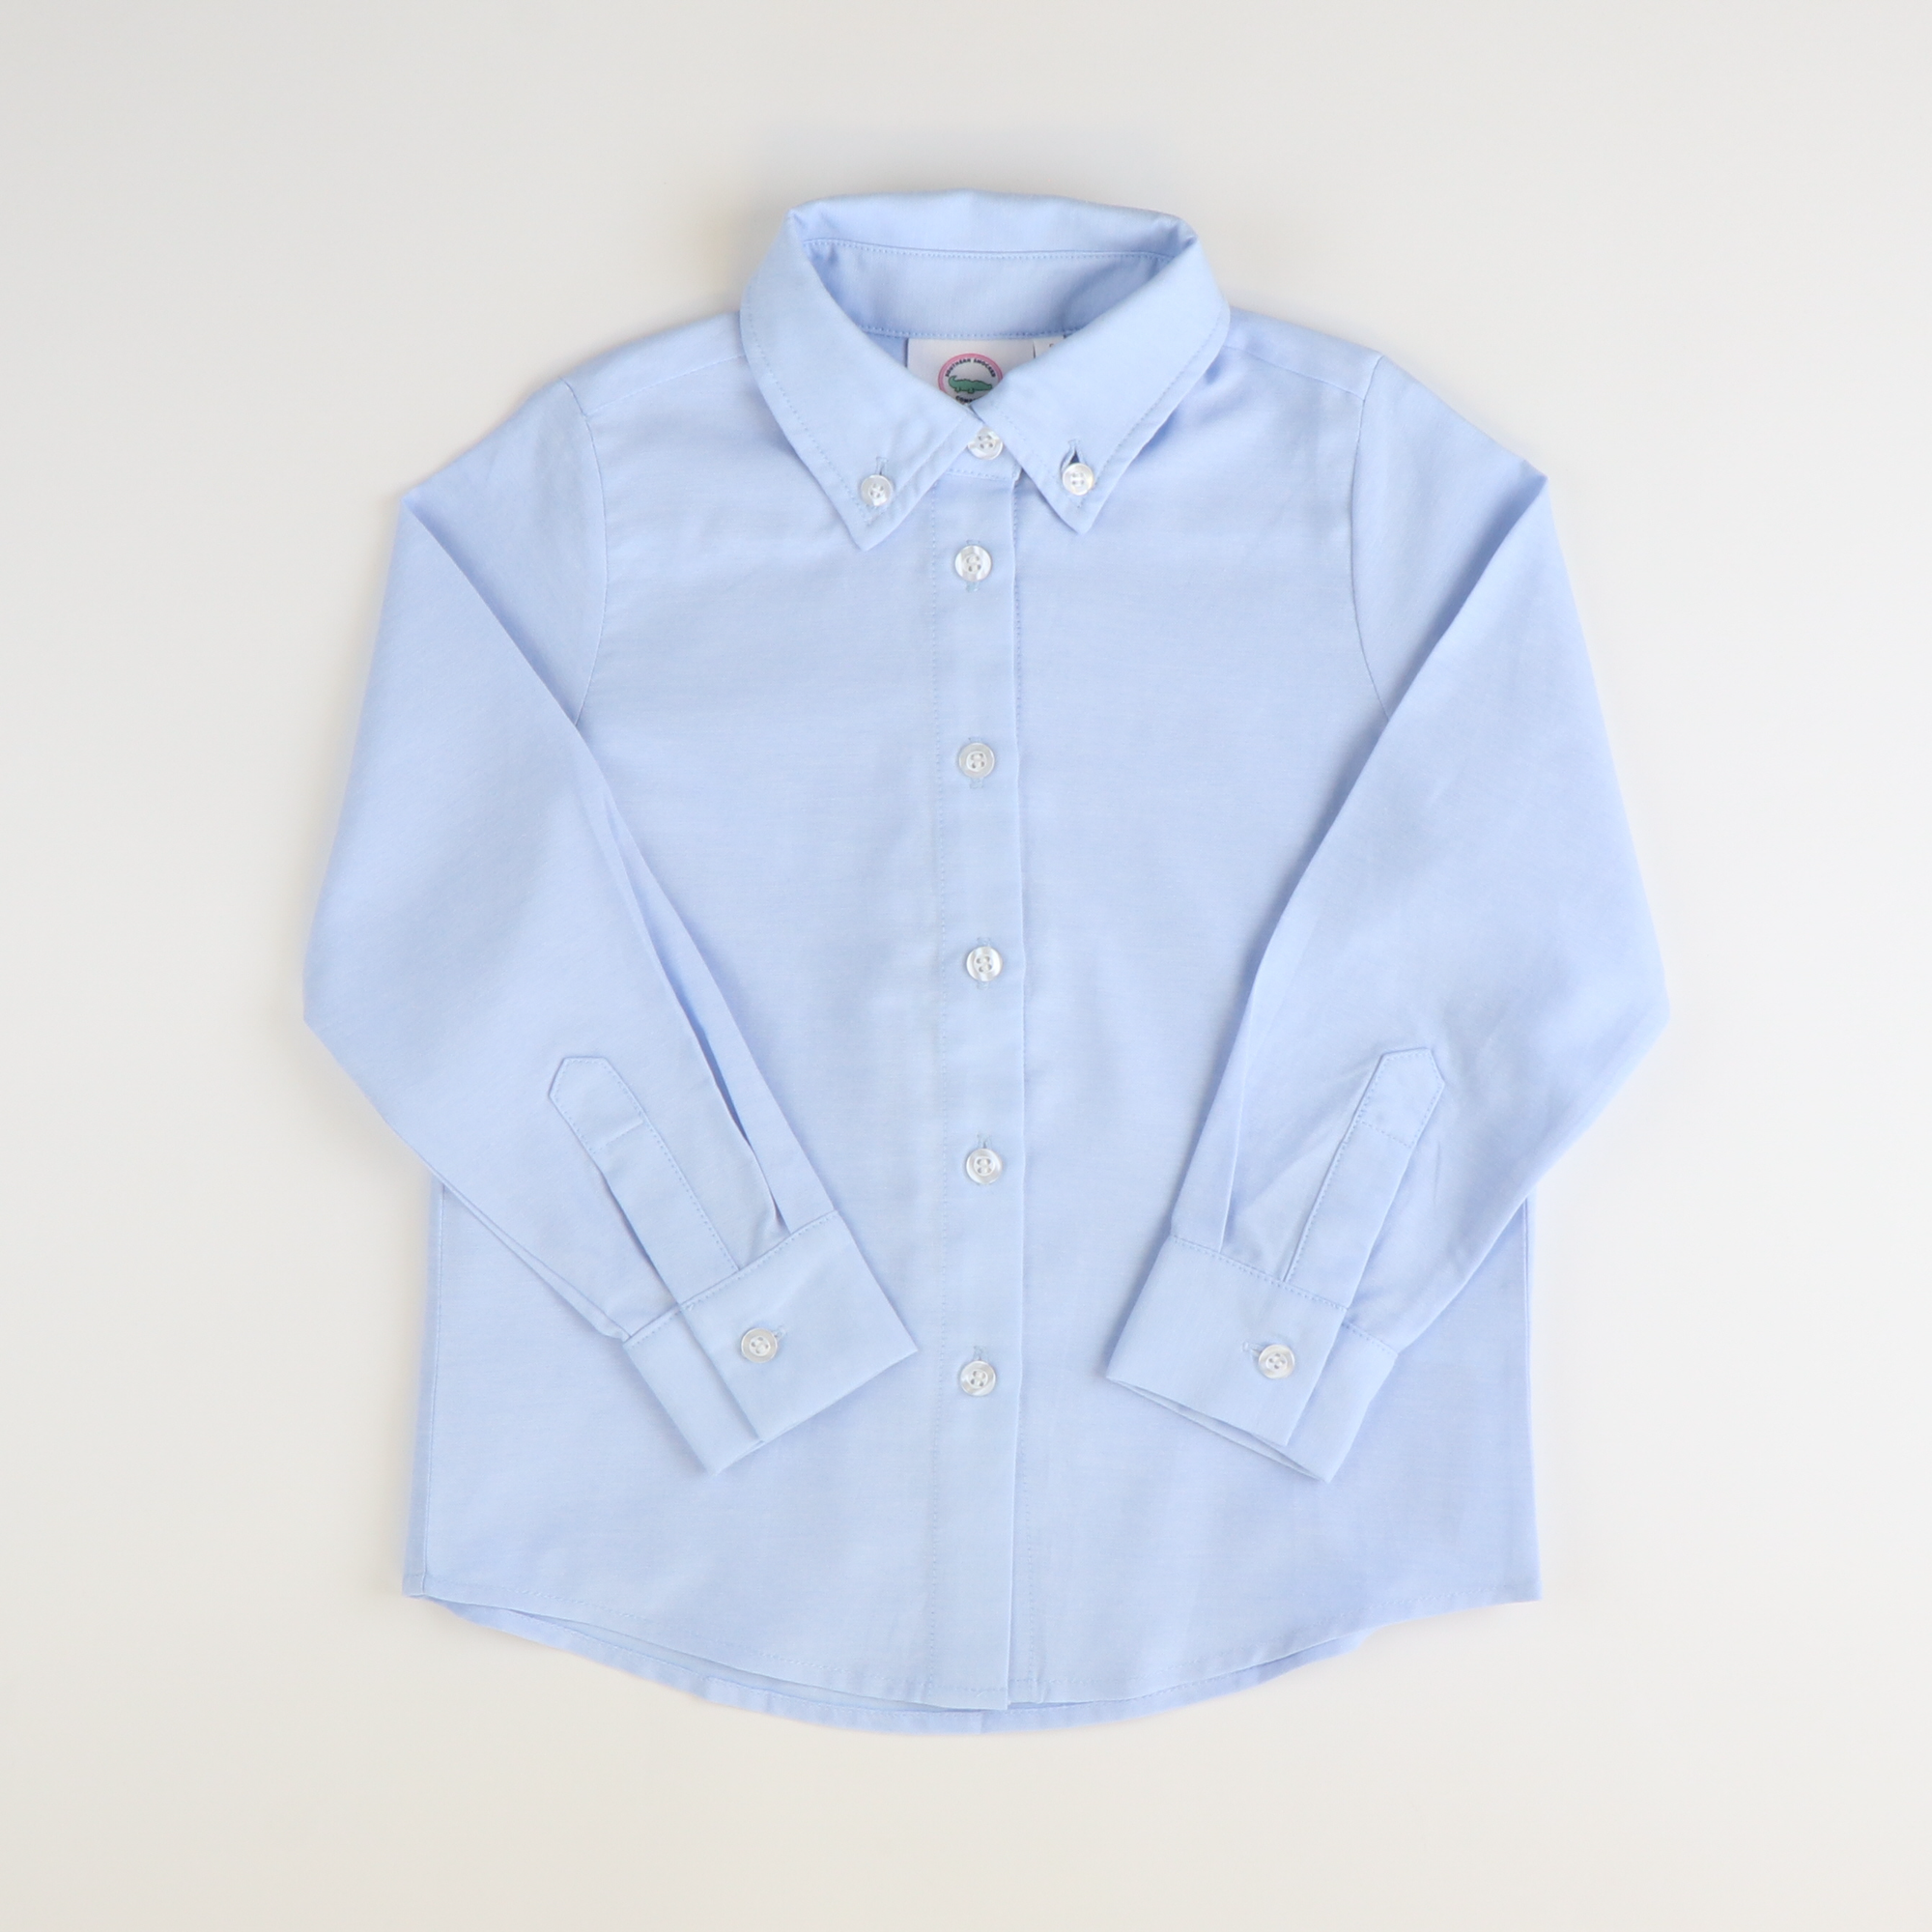 Boys L/S Button Down Shirt - Light Blue Oxford